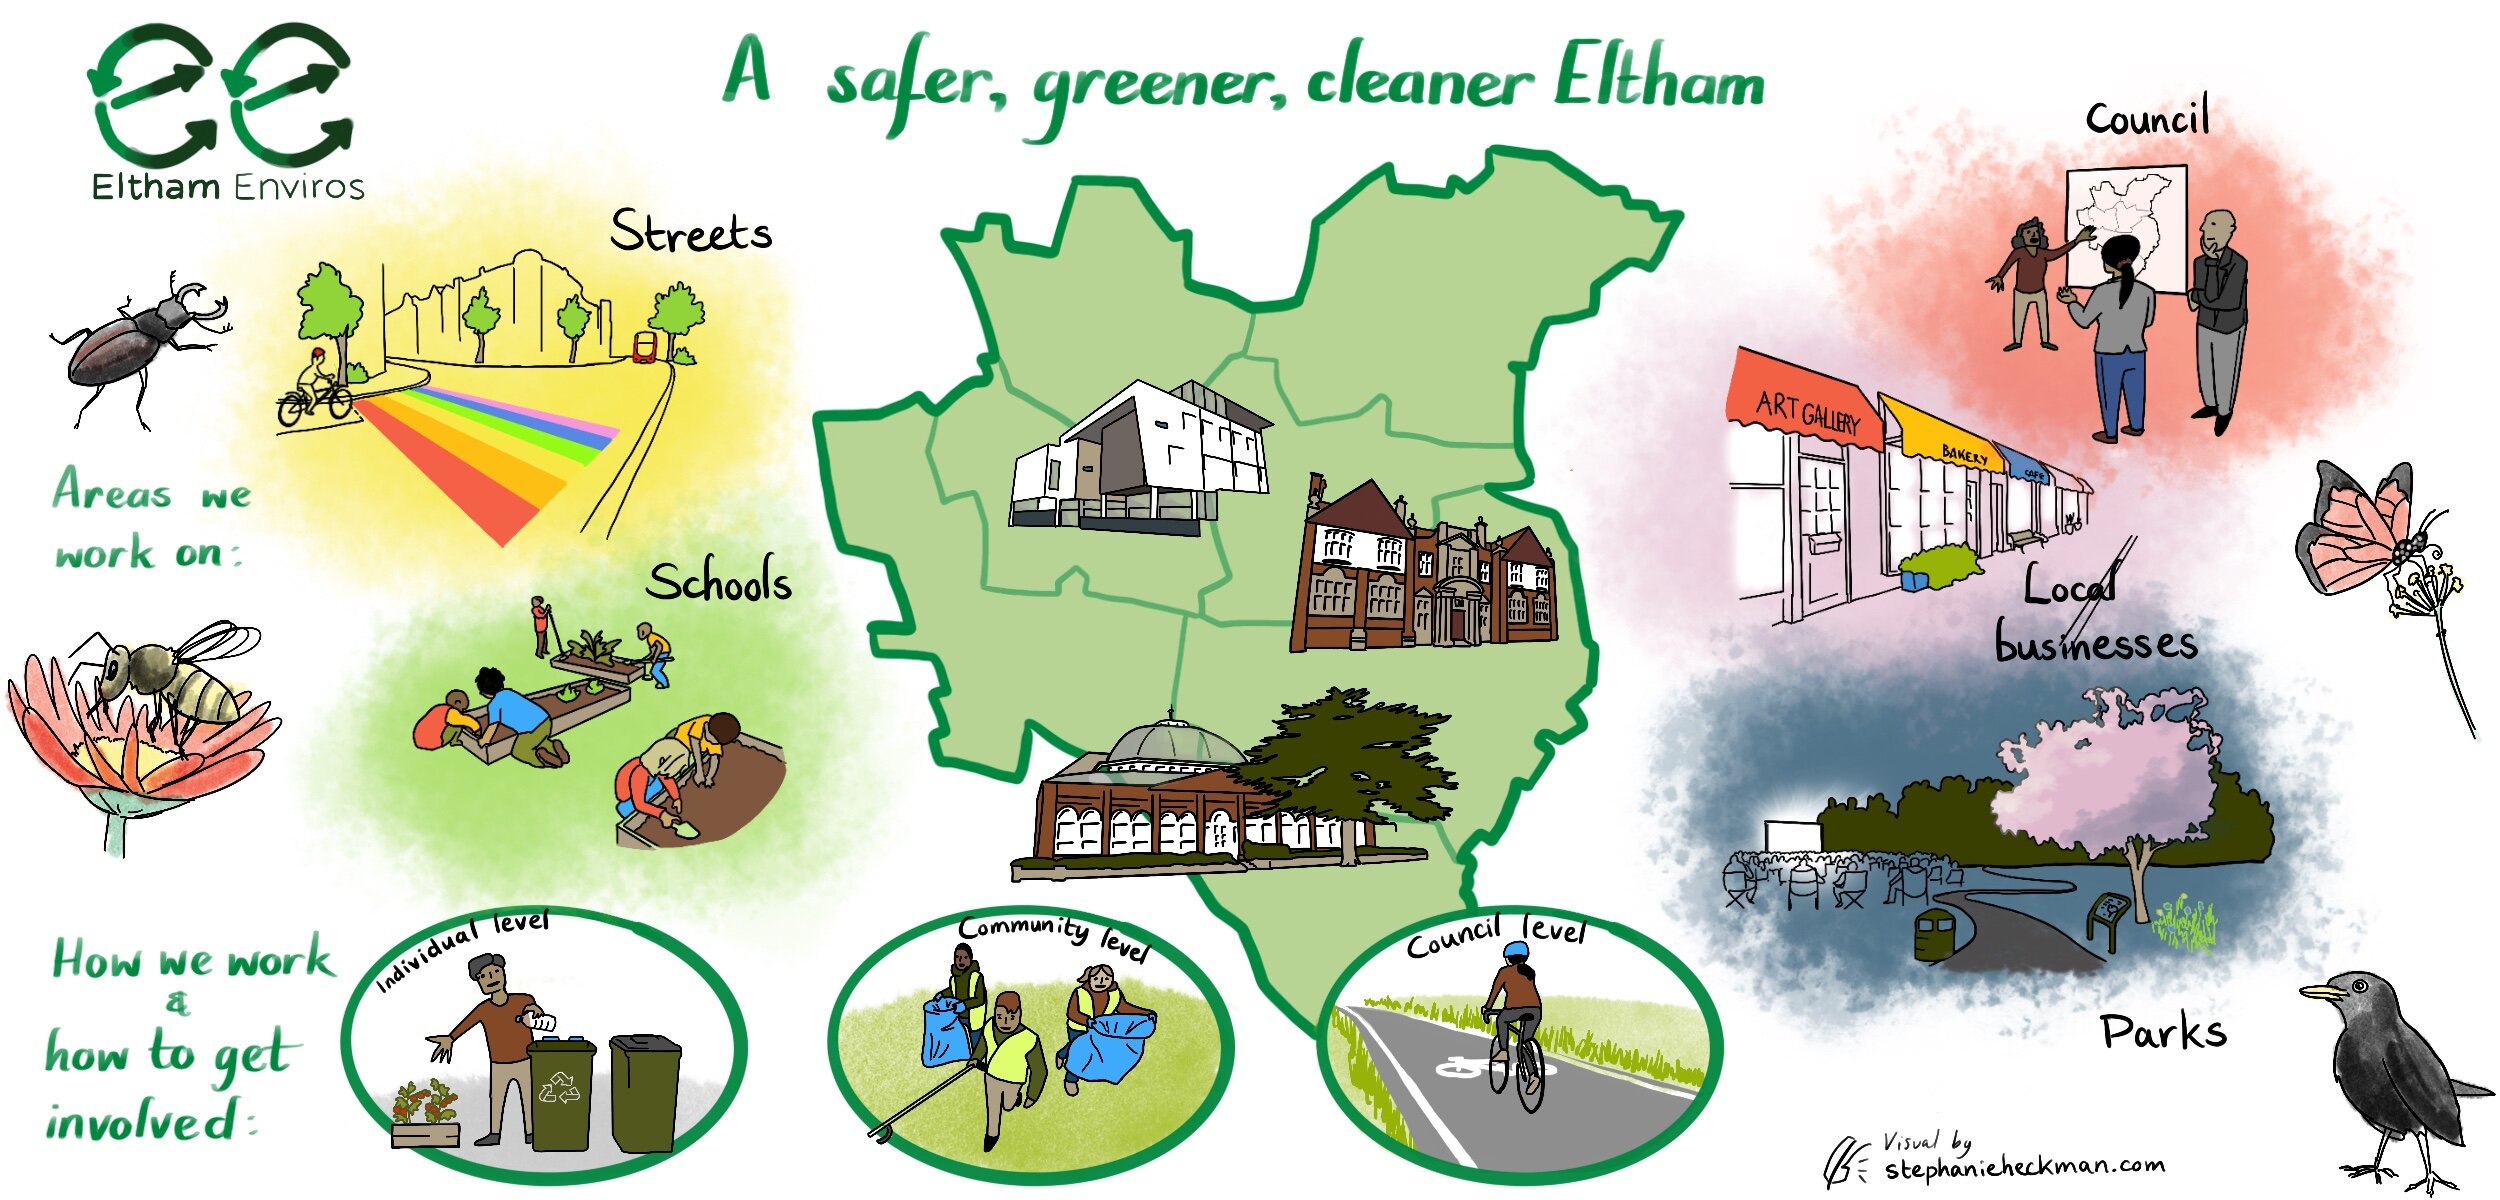 Illustrated vision for London-based community group Eltham Enviros